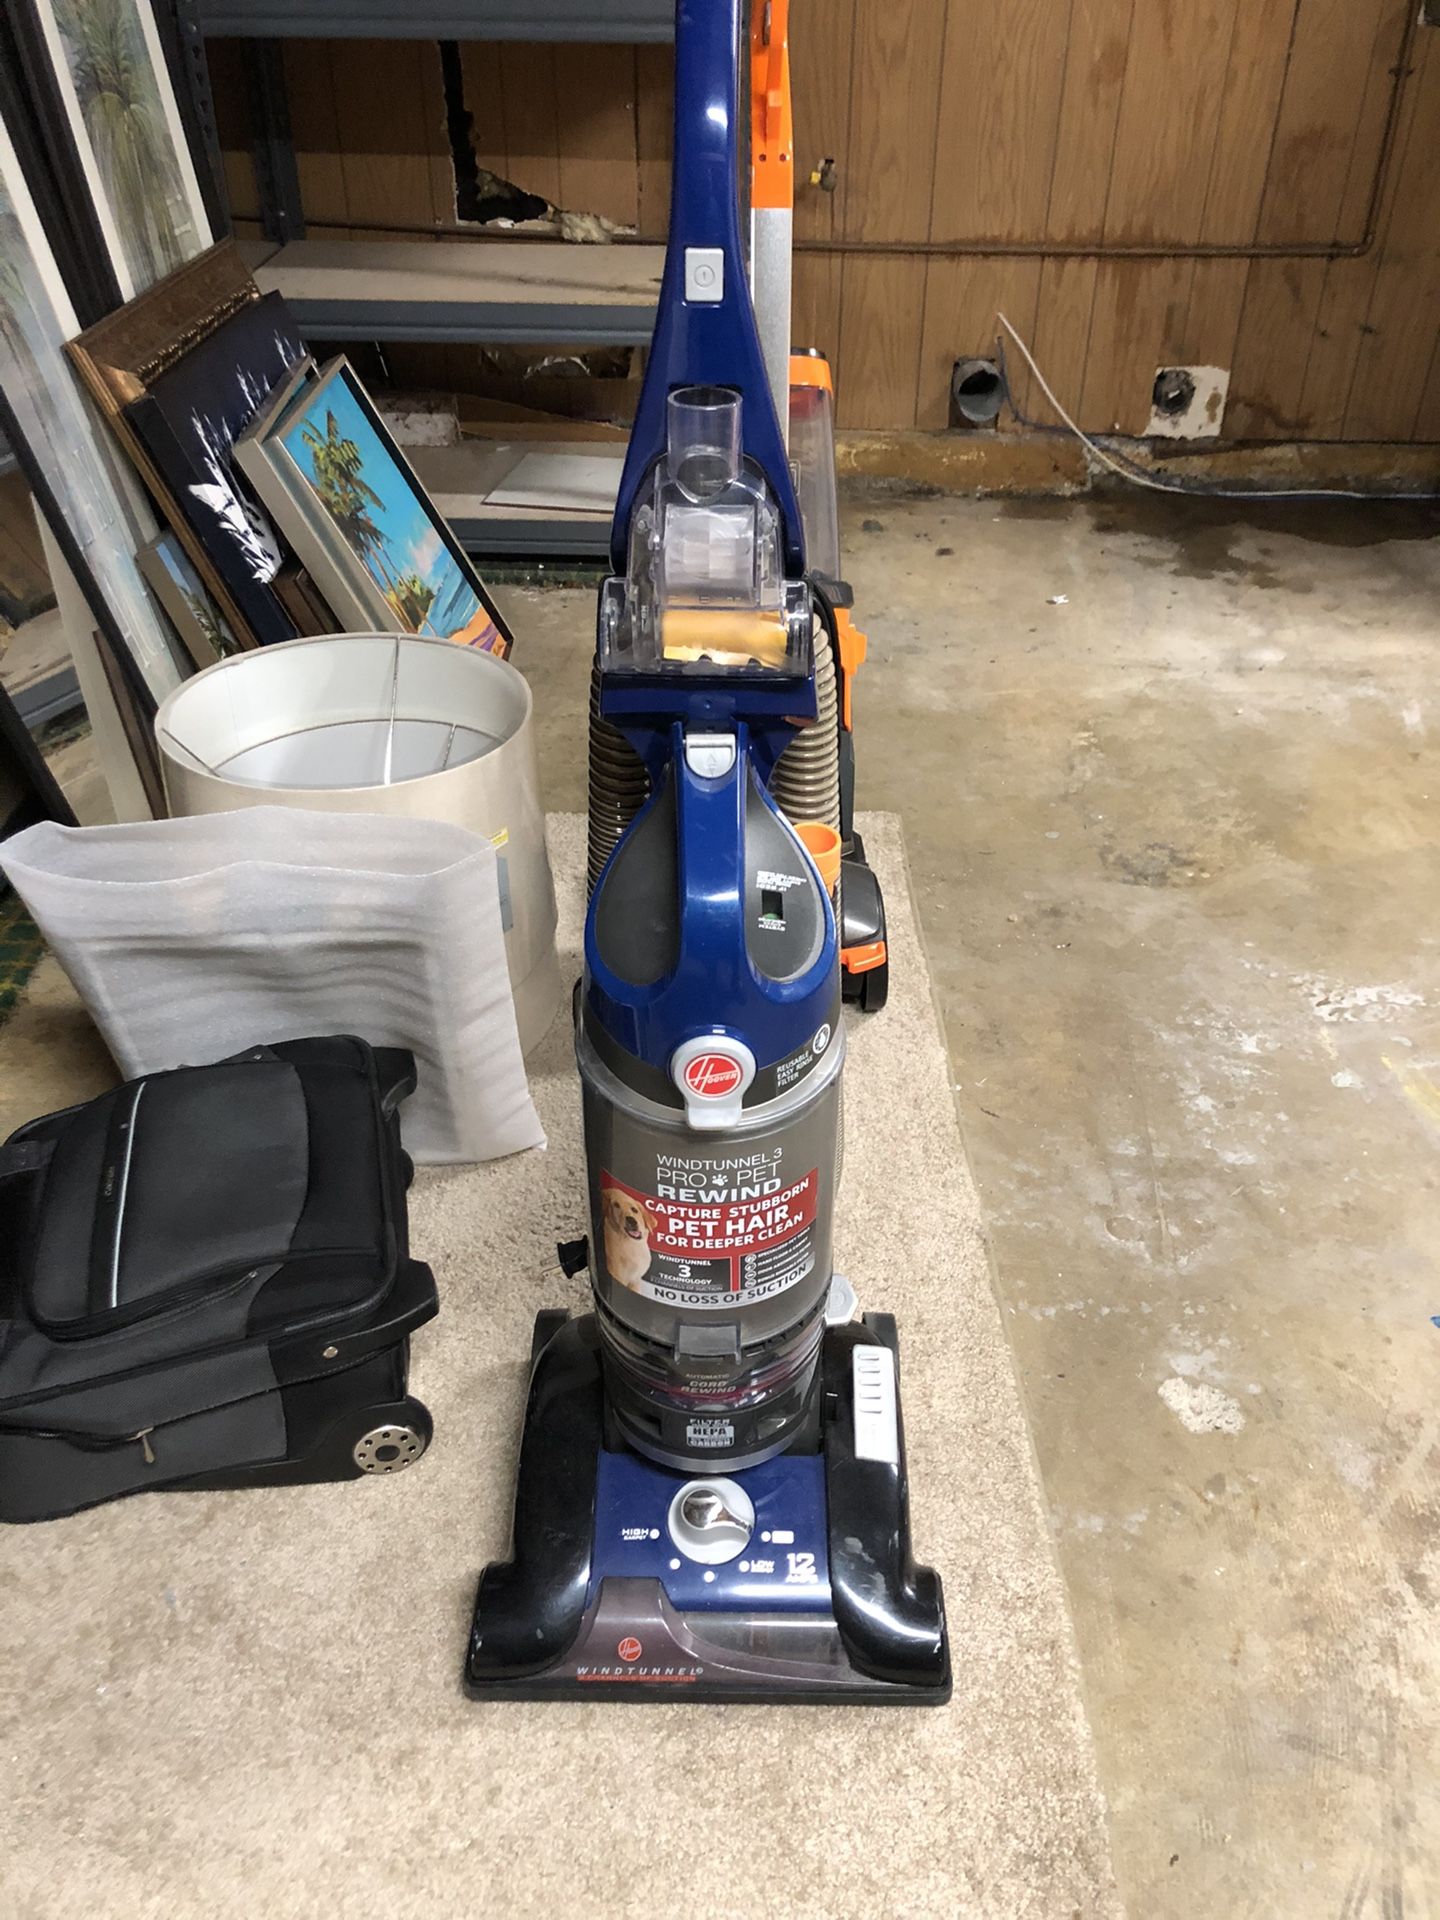 Vacuum works great!